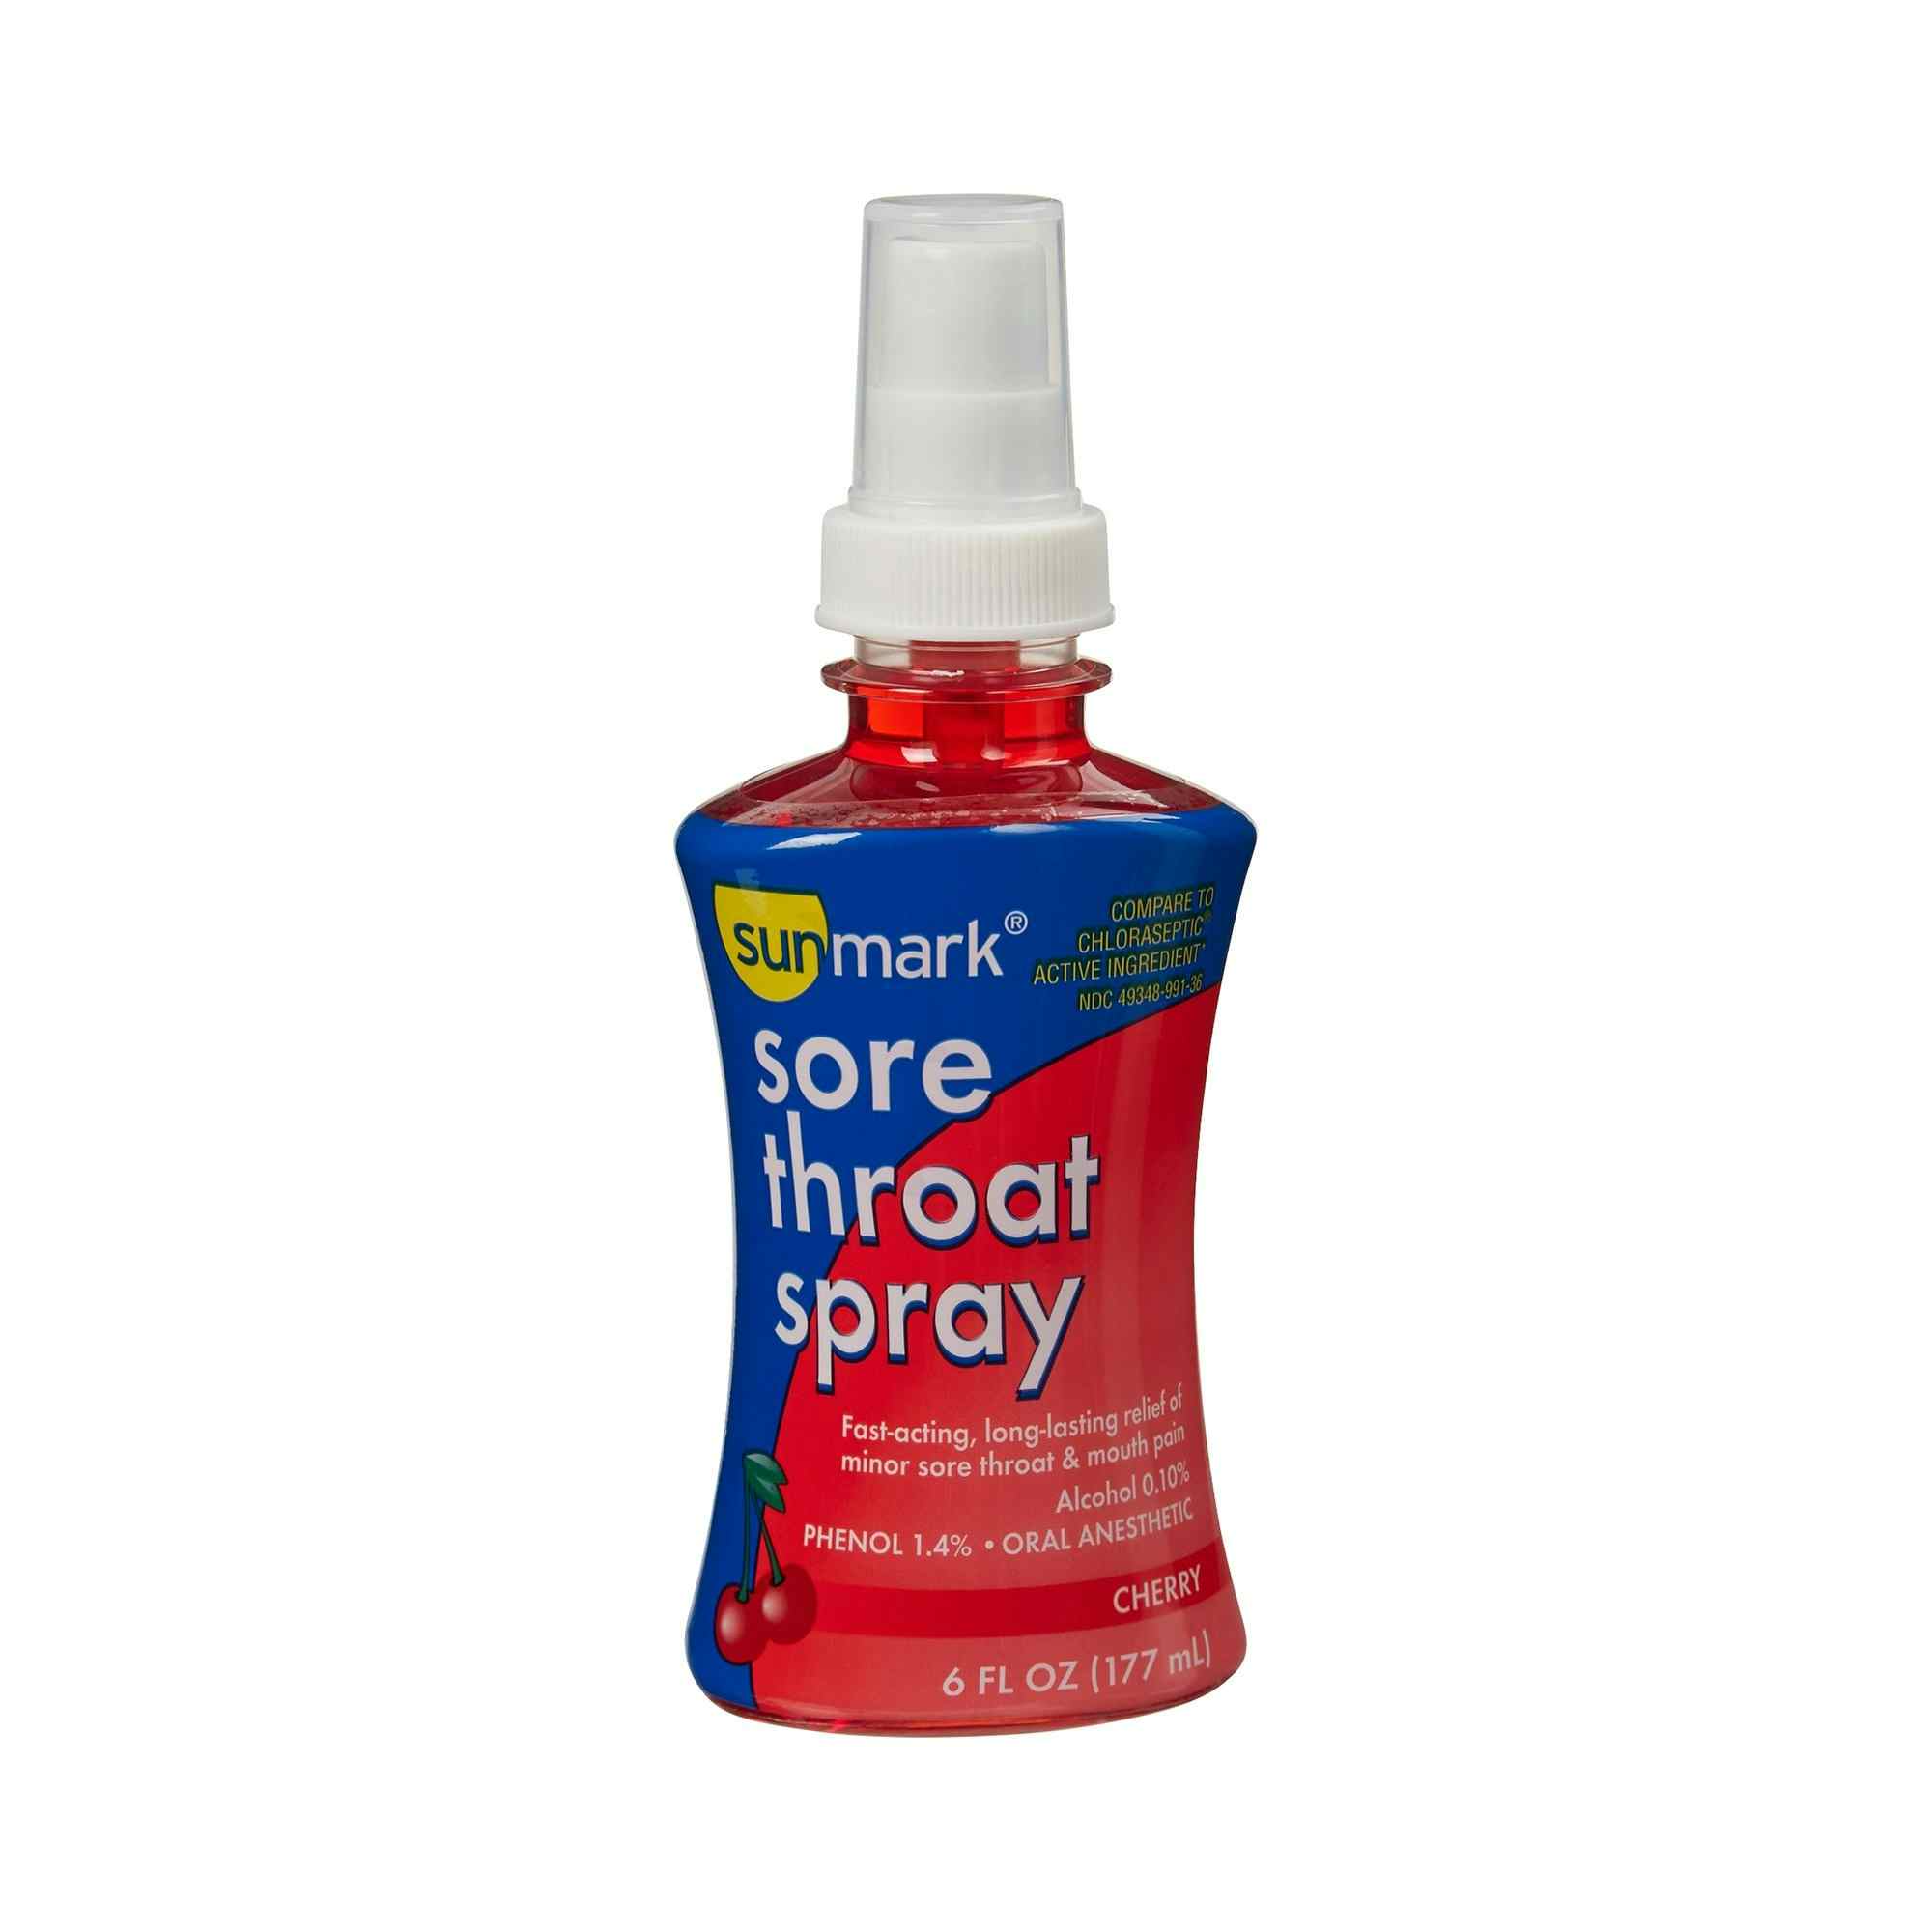 Sunmark Sore Throat Spray, Cherry, 6 oz., 49348099136, 1 Each